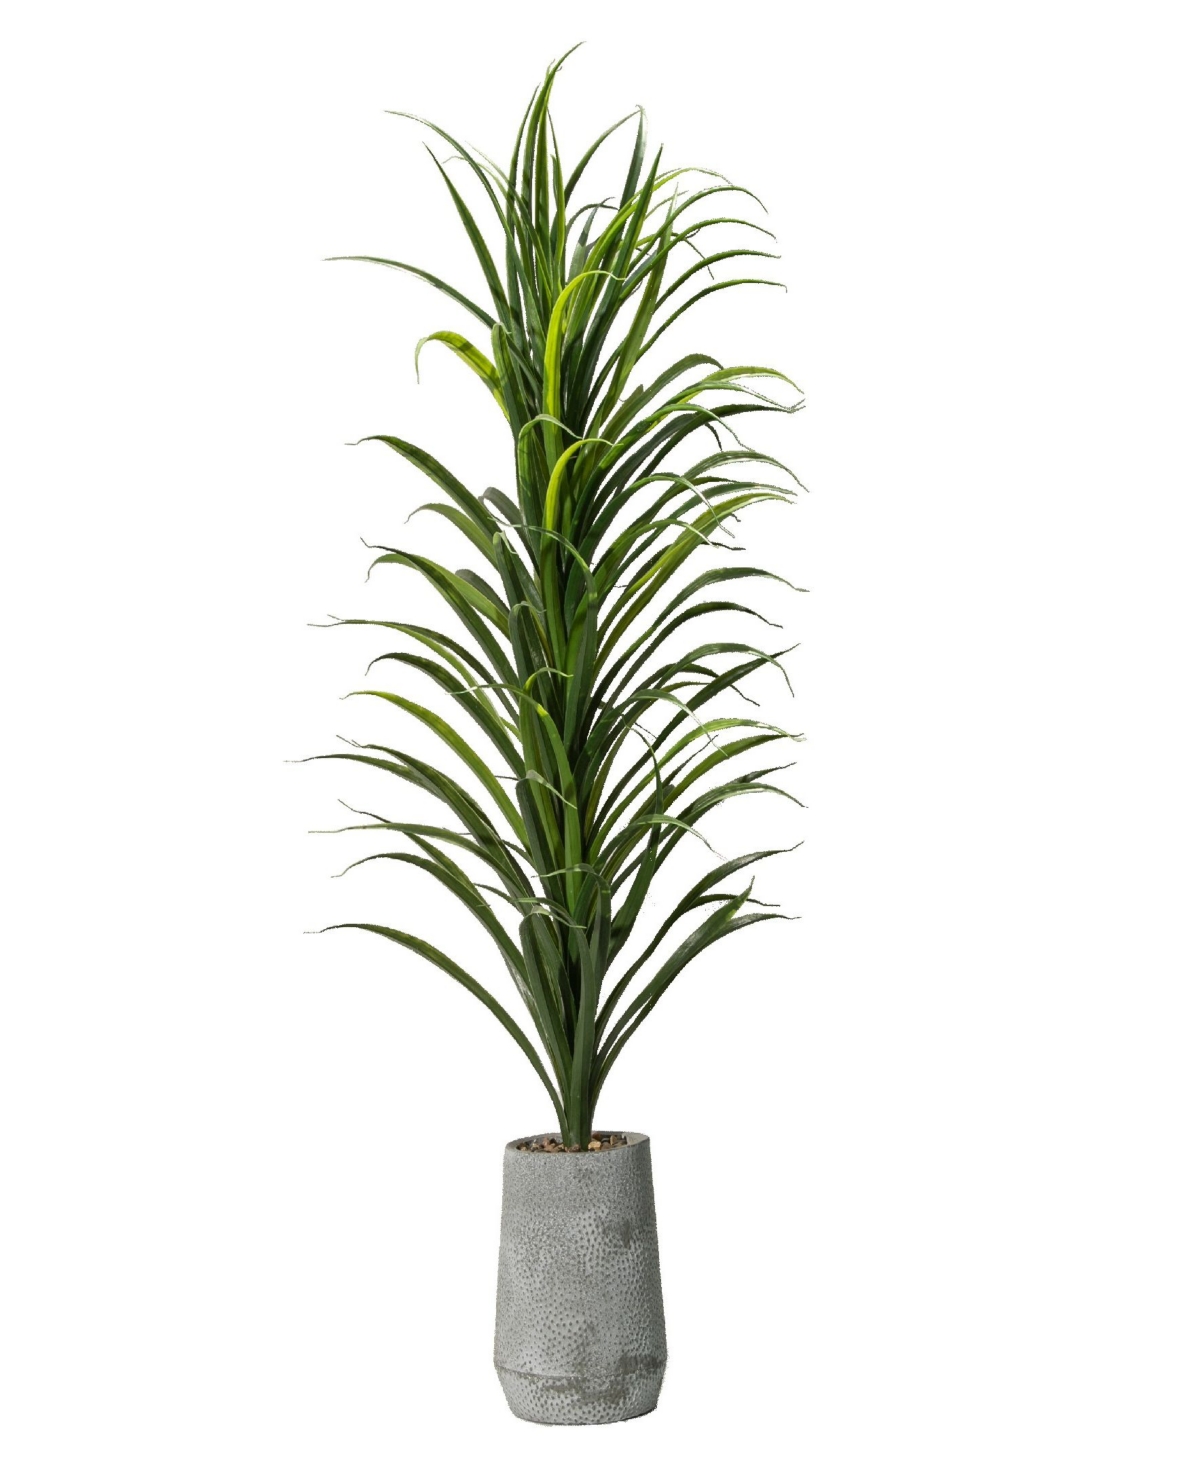 56" Tall Grass Plant with Fiber Stone Pot - Green